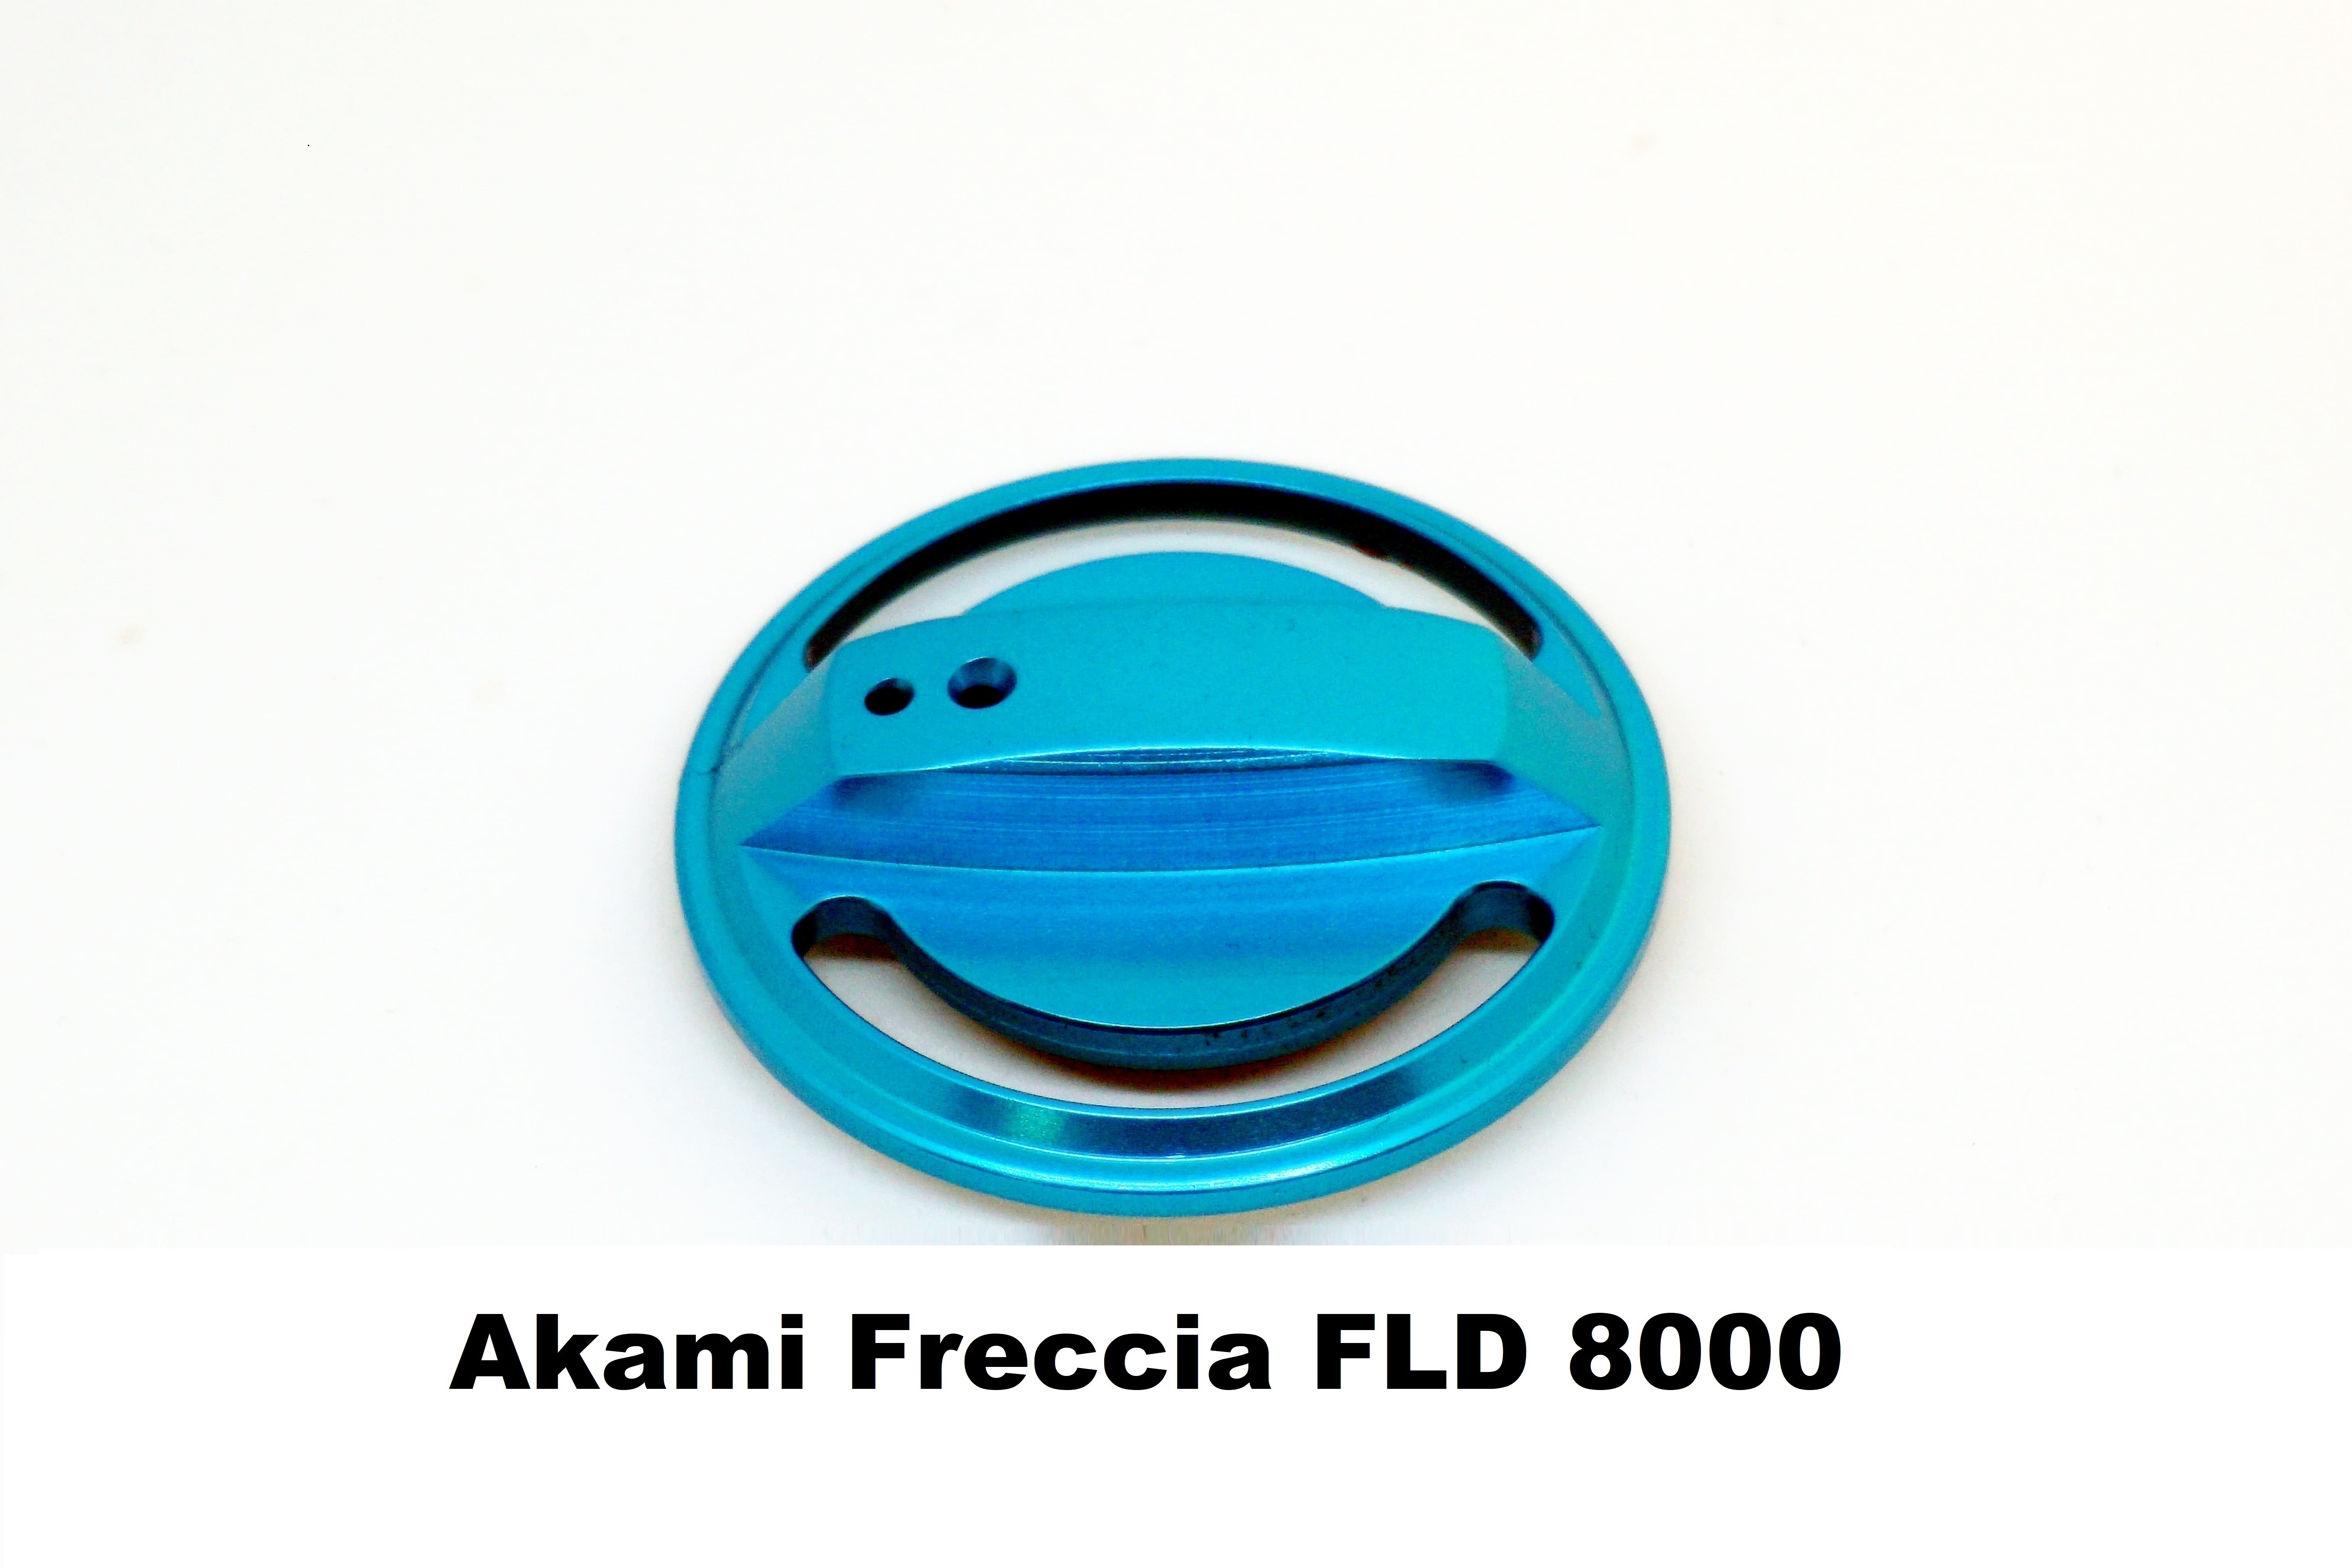 Bremsenknopf für Brandungsrolle Akami Freccia FLD 8000